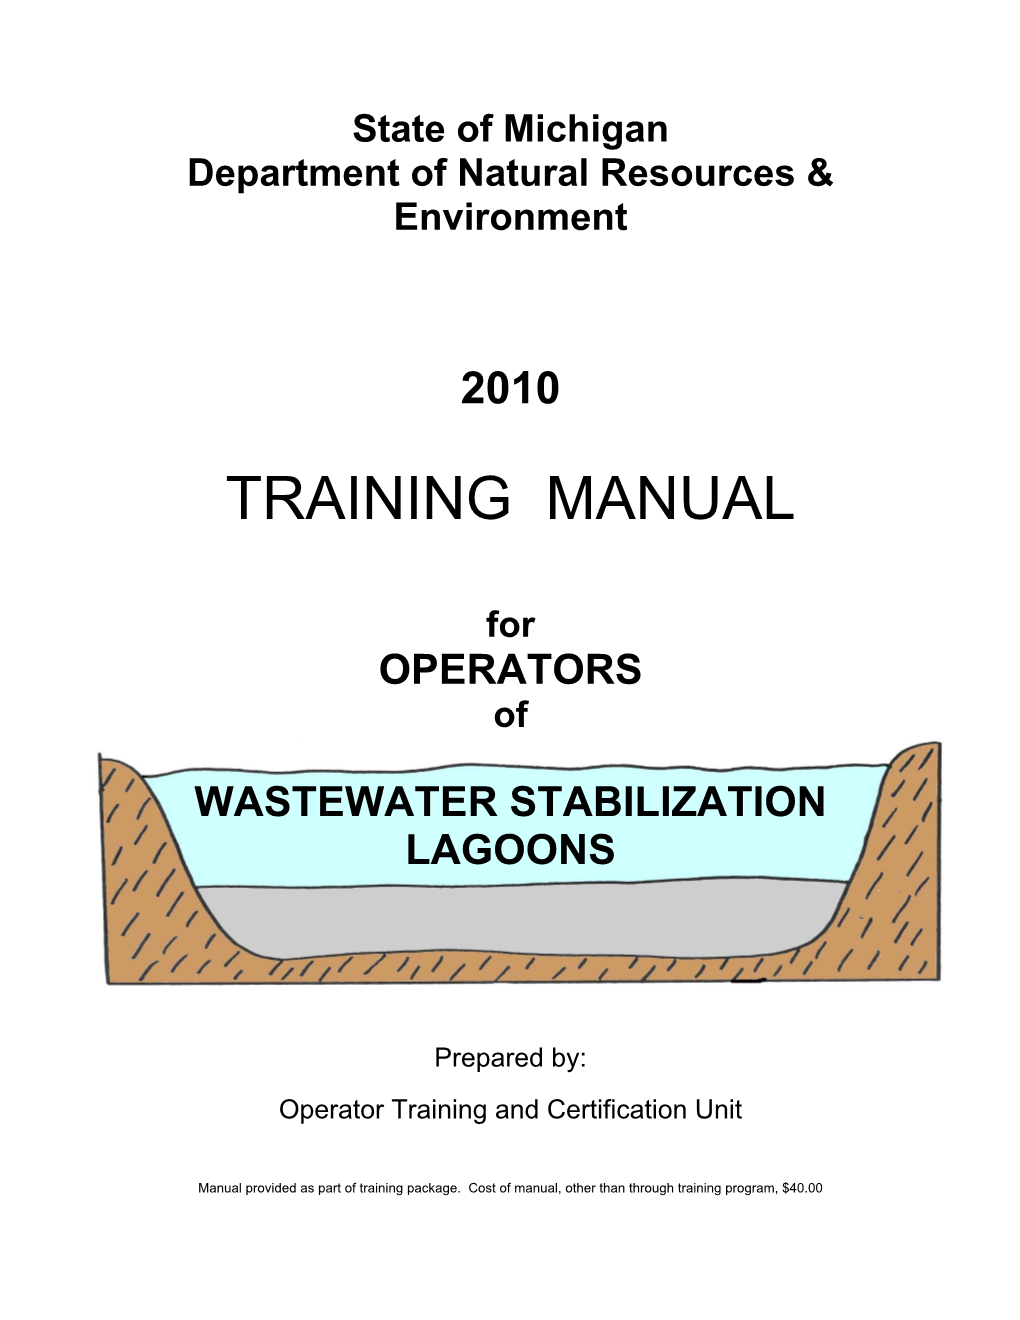 Wastewater Stabilization Lagoon Training Manual